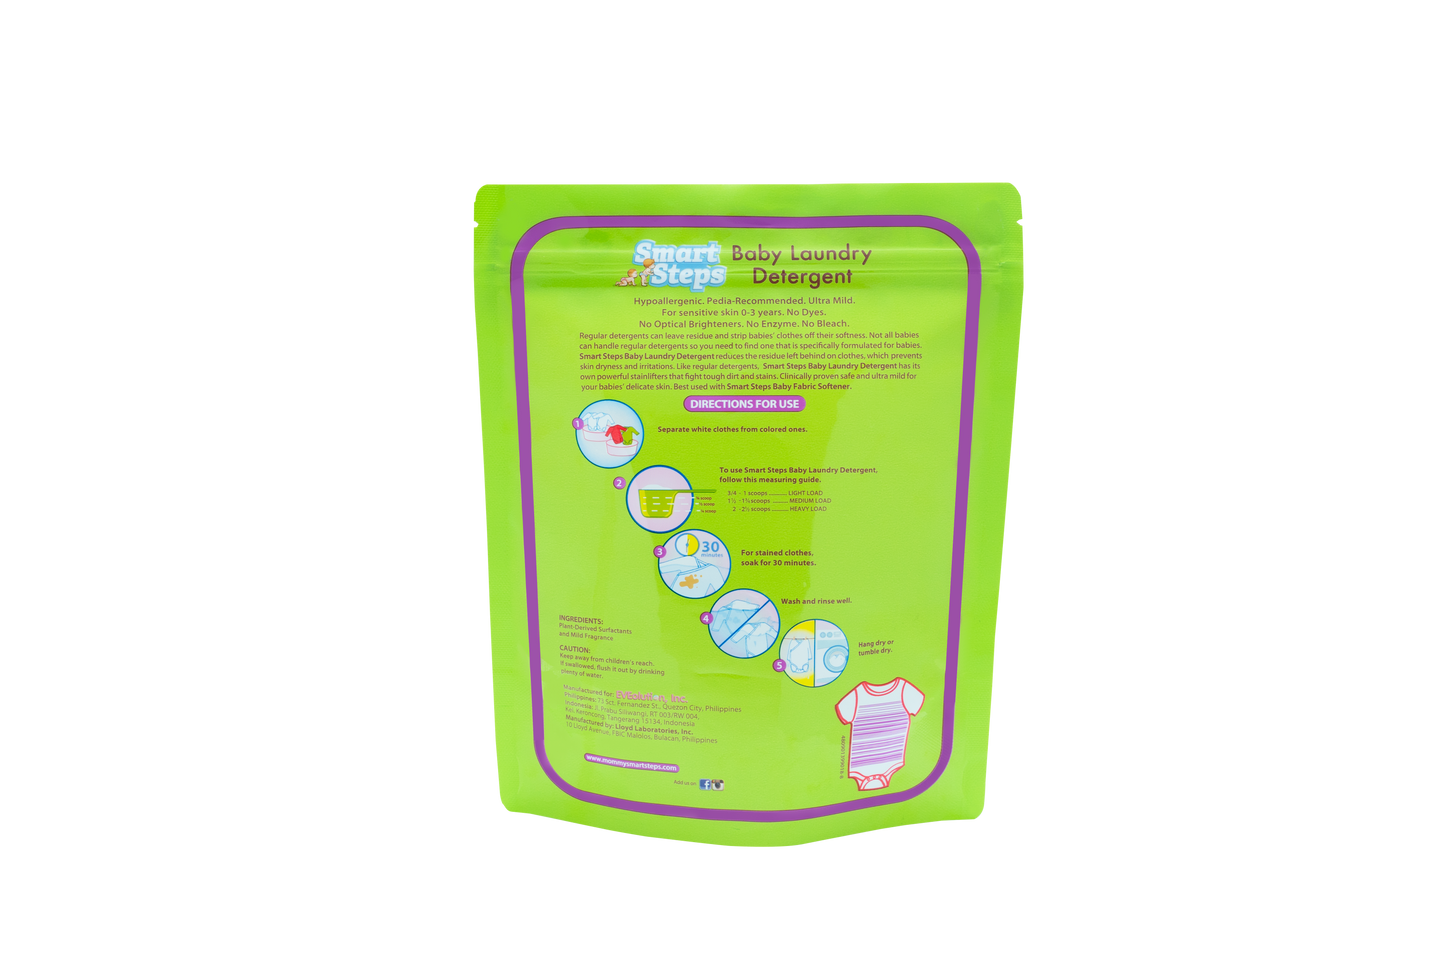 Smart Steps Baby Laundry Detergent Powder 900g